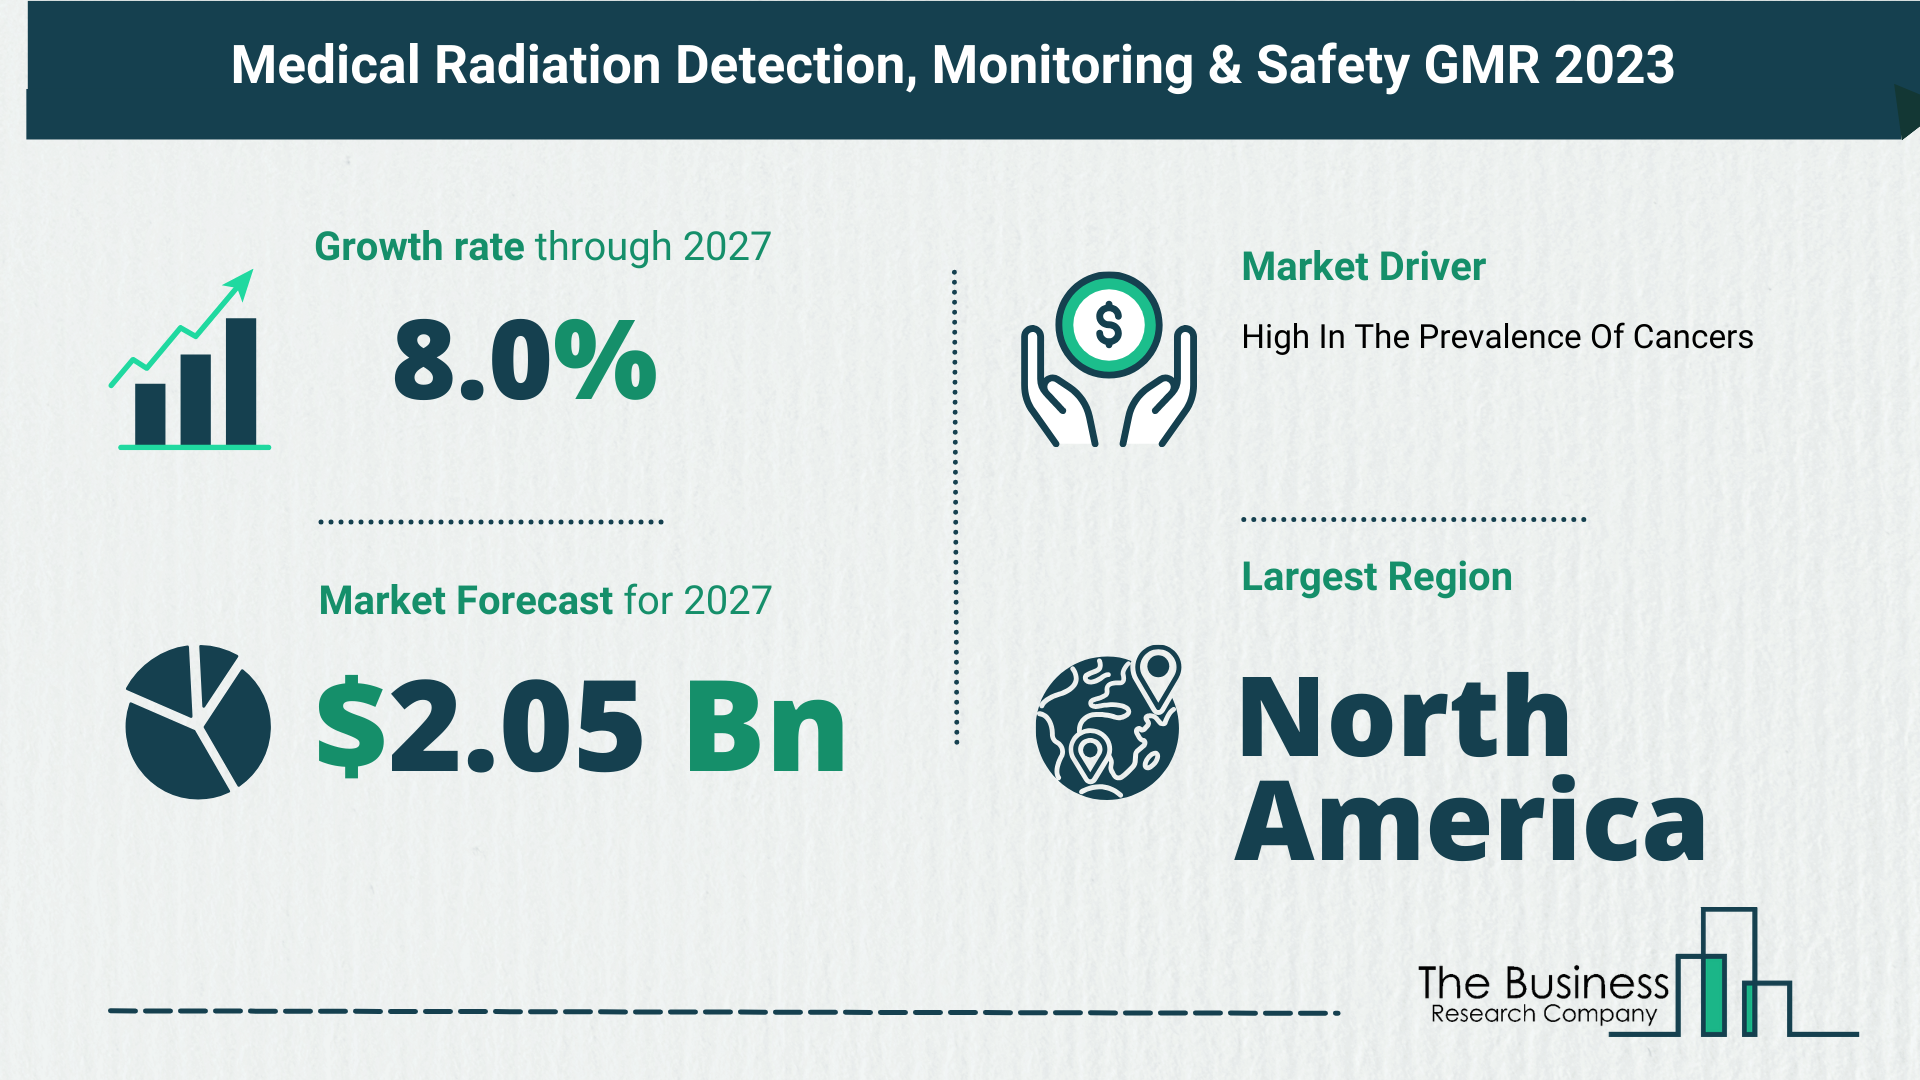 Global Medical Radiation Detection, Monitoring & Safety Market Size